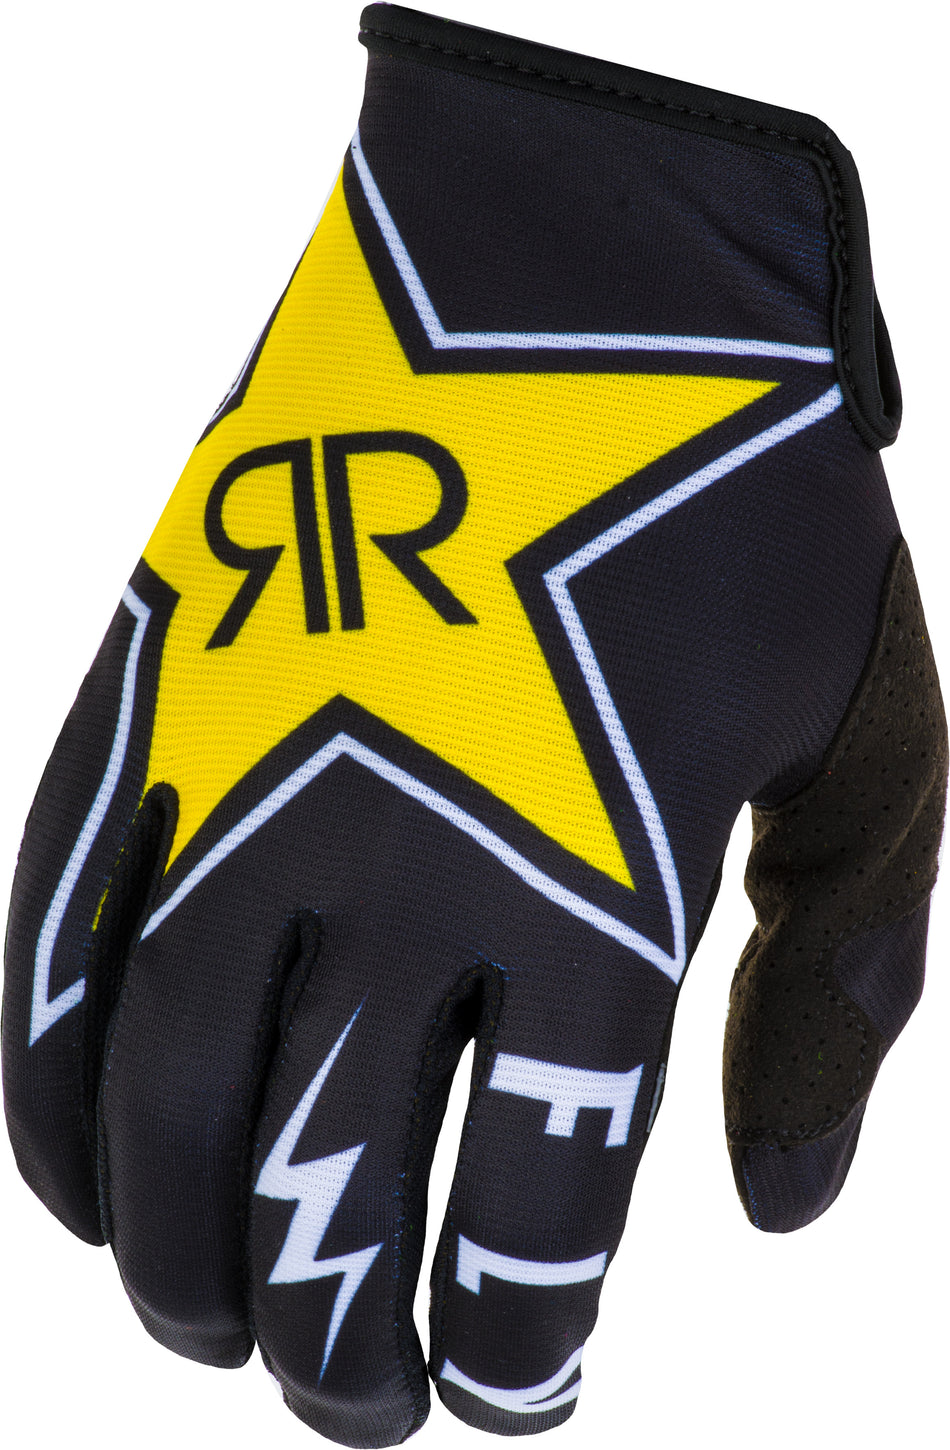 FLY RACING Lite Rockstar Gloves Black/White Sz 11 373-01311